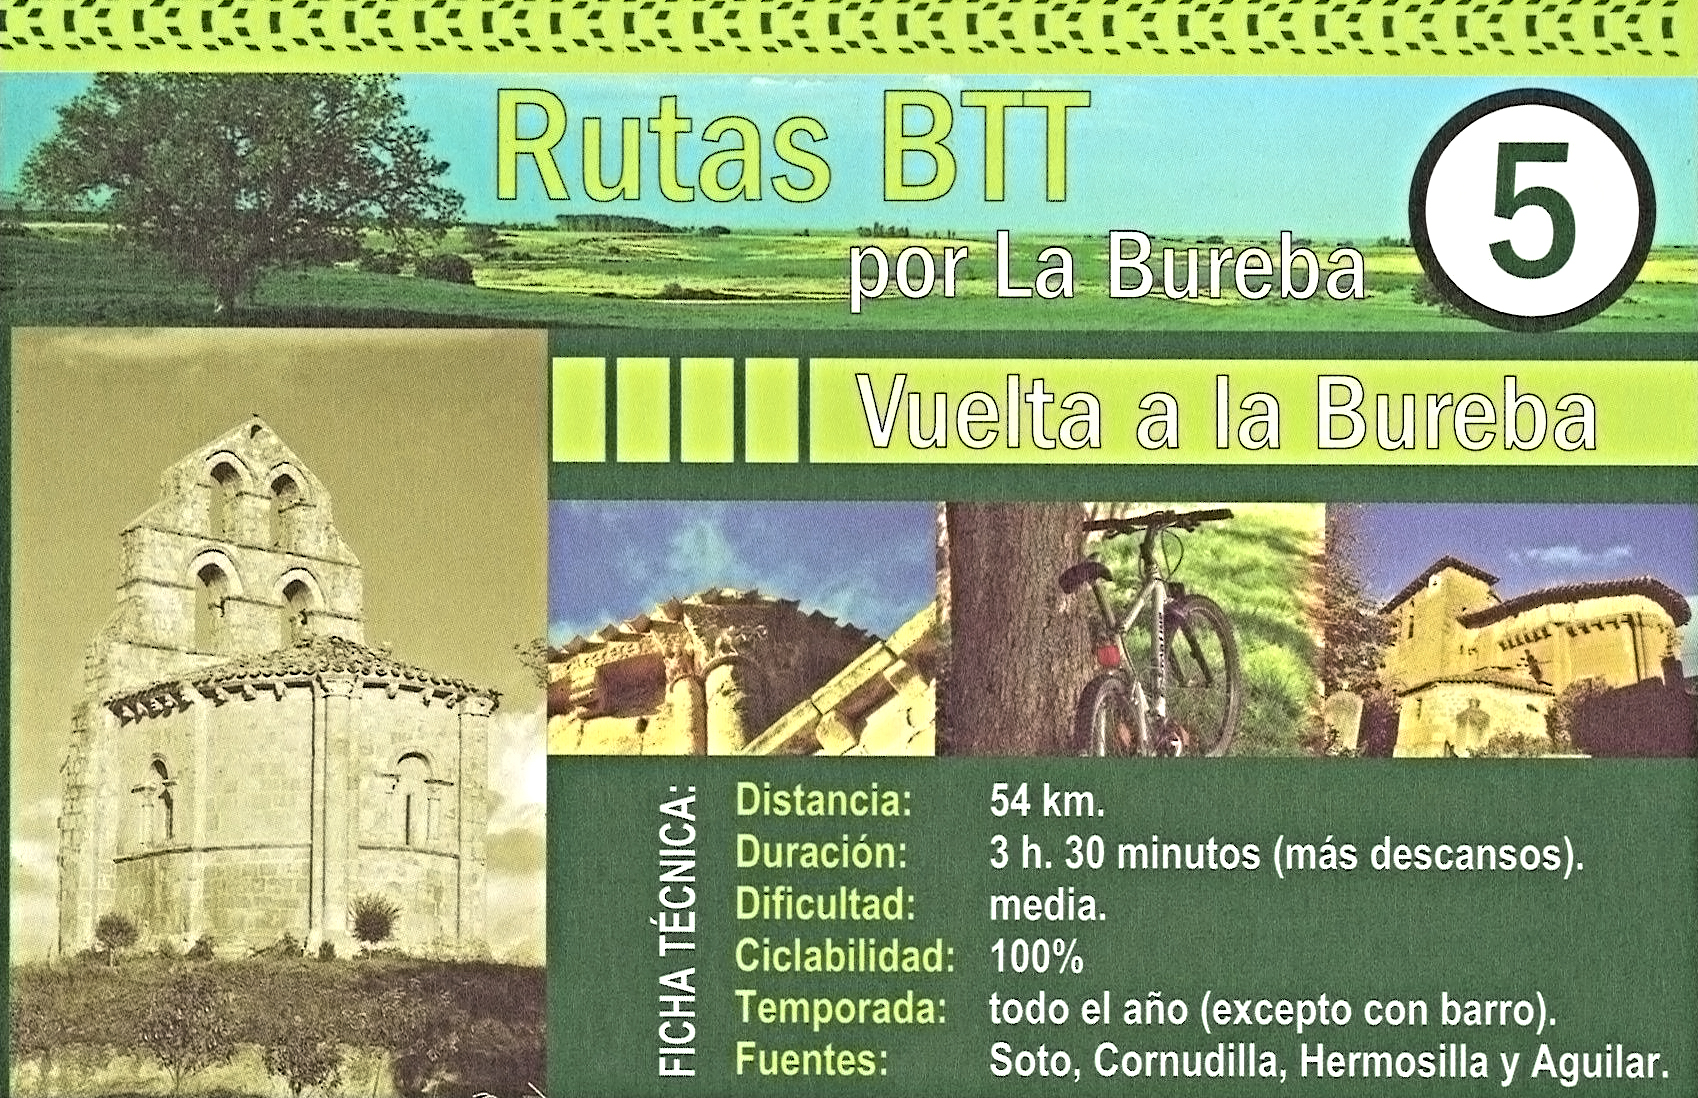 Rutas BTT, Comarca de La Bureba - Burgos - La Bureba, arte románico, castillos - Burgos ✈️ Foro Castilla y León